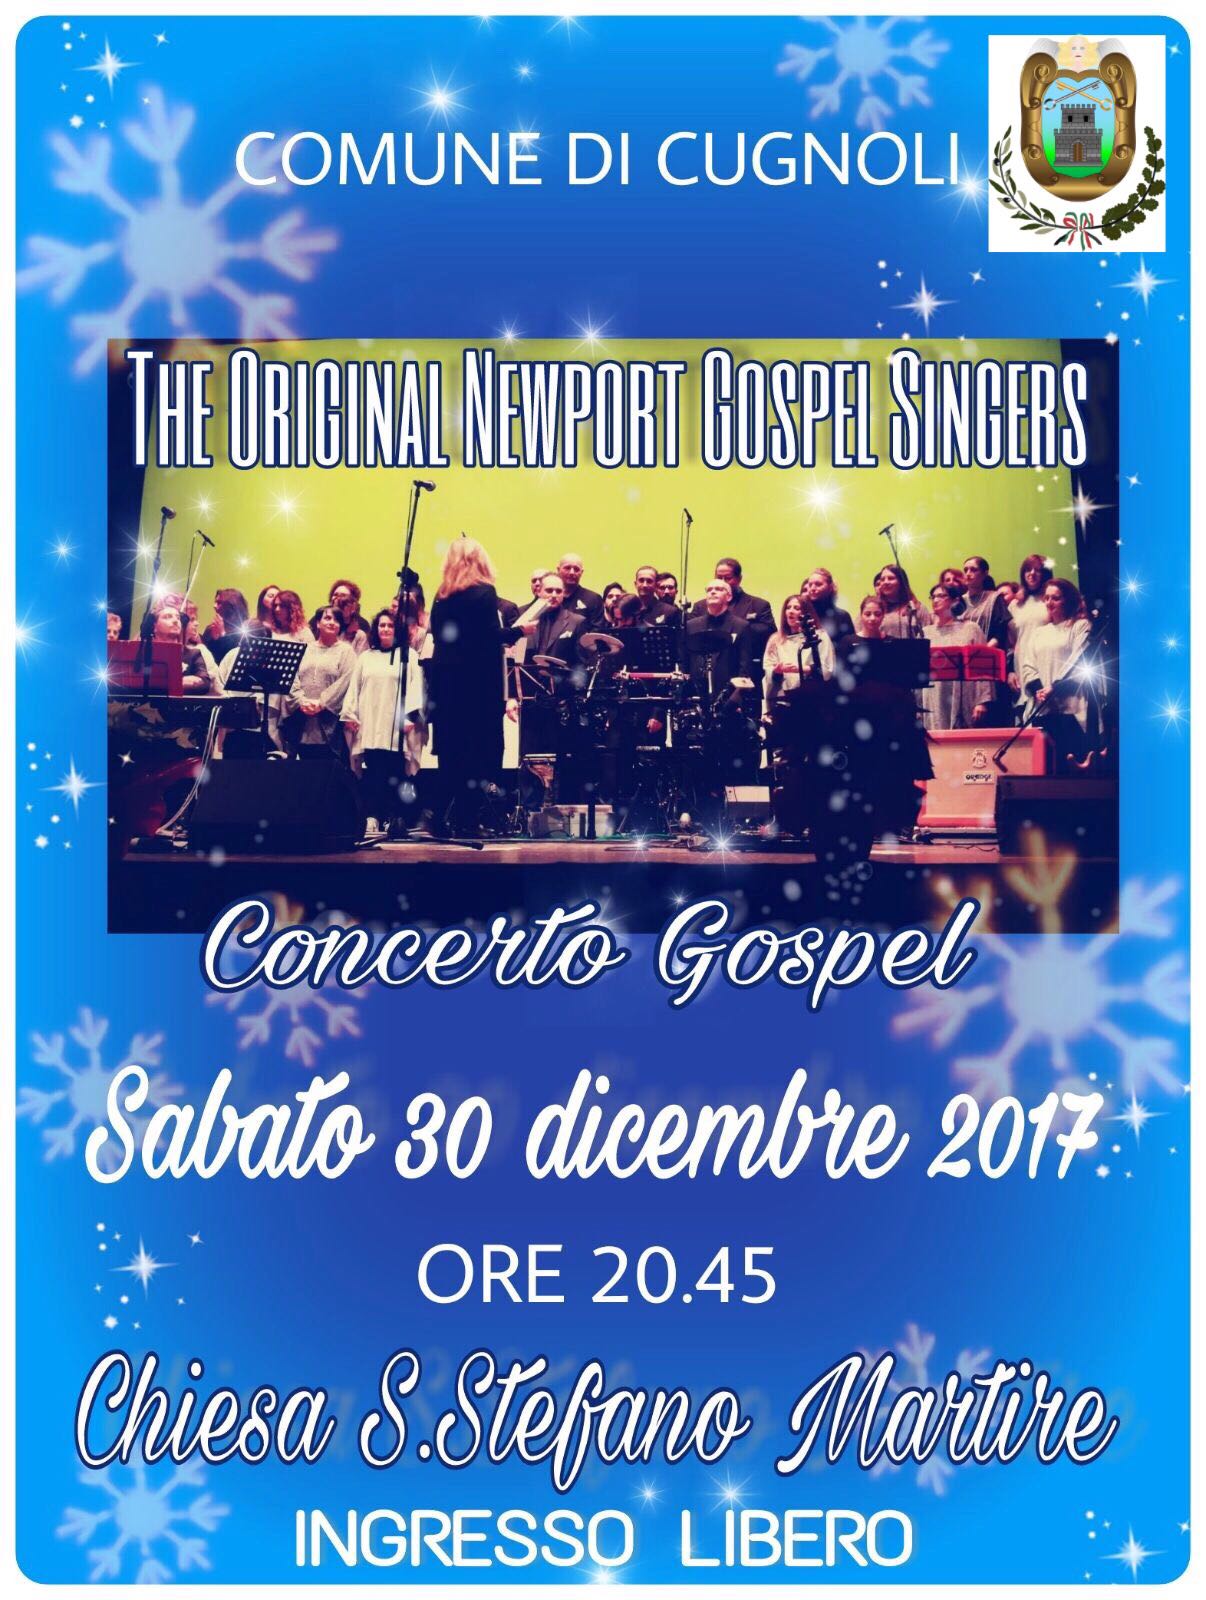 Concerto Gospel - 30 dicembre 2017